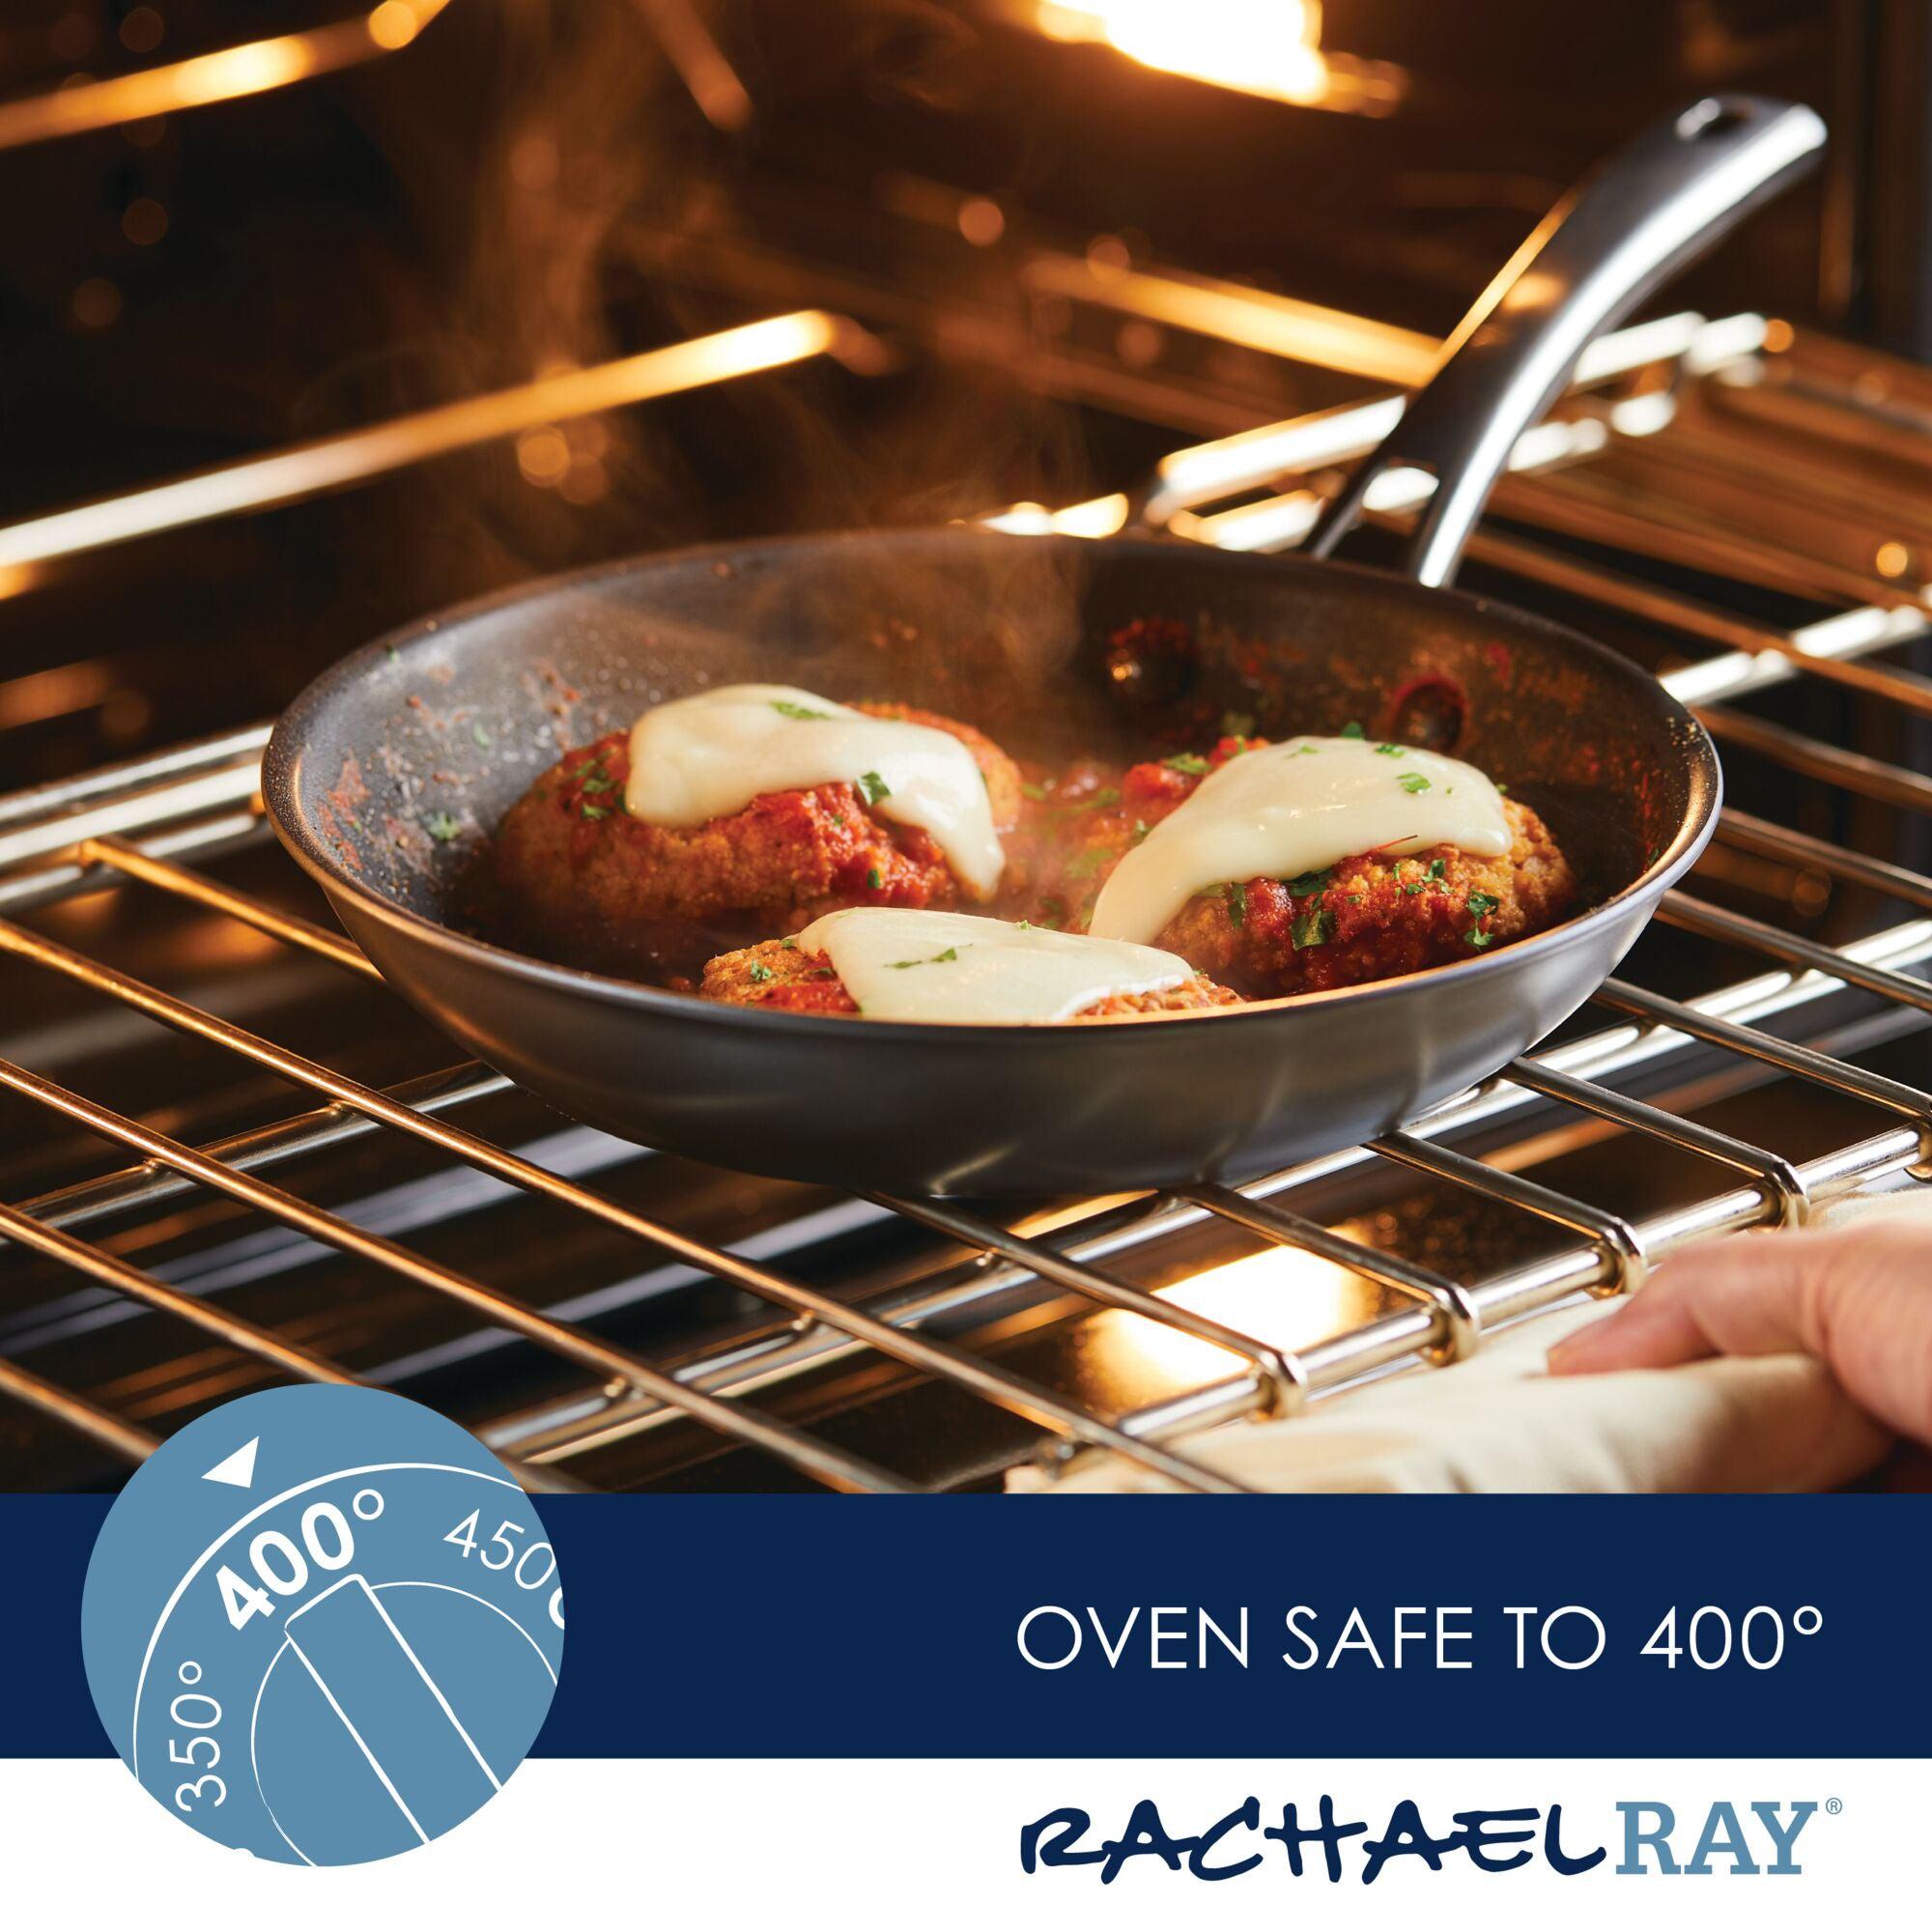 Rachael Ray Brights Hard Anodized Nonstick Saute Pan / Frying Pan / Fry Pan  - 5 Quart, Gray